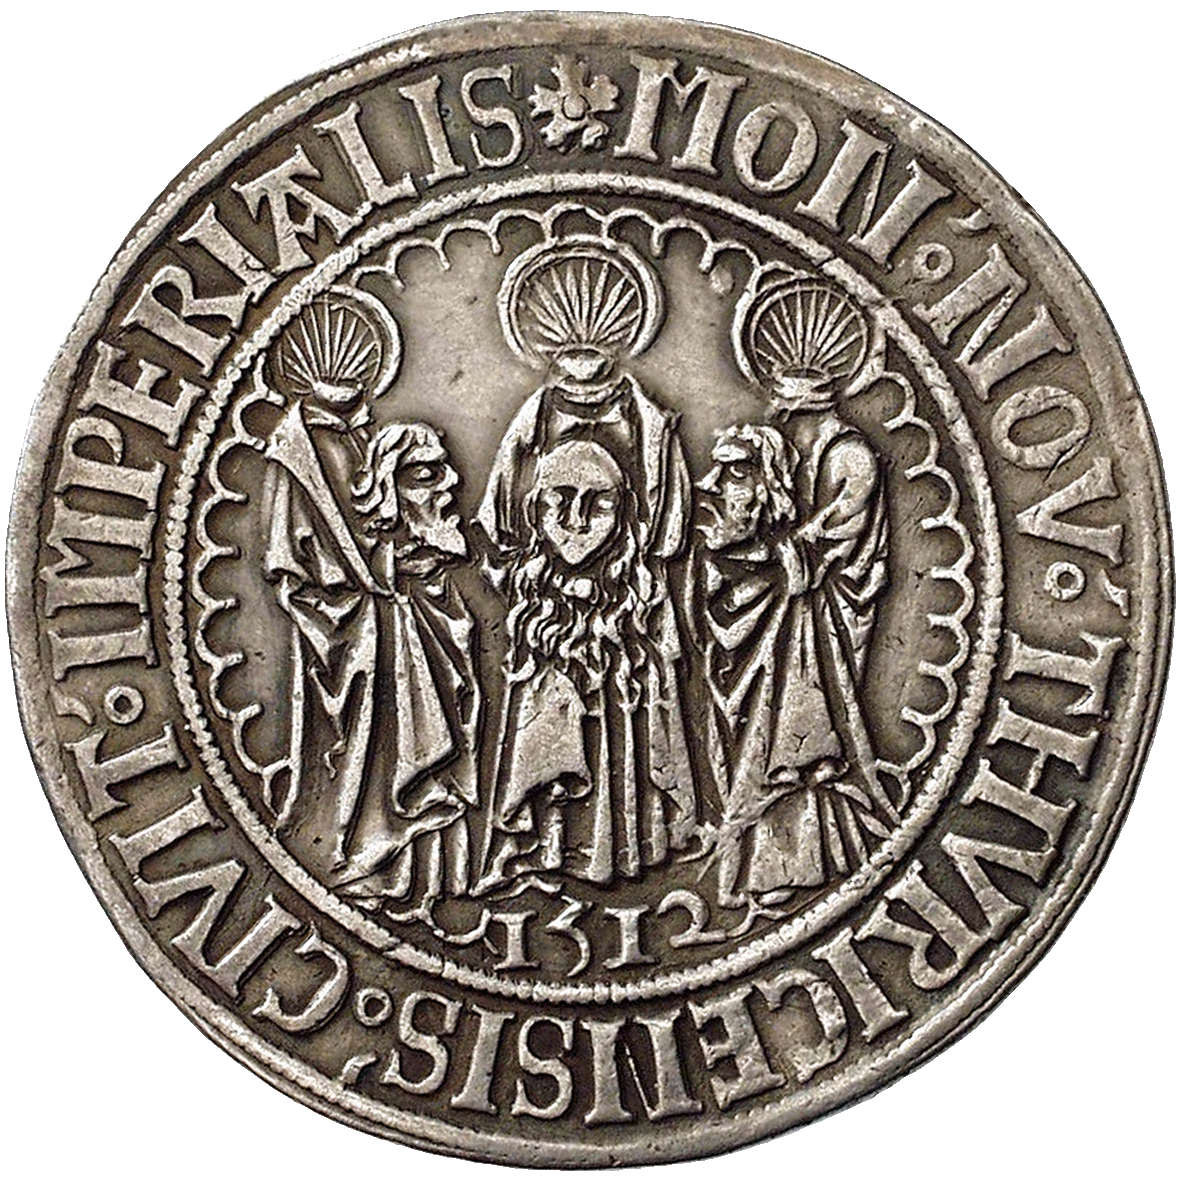 Holy Roman Empire, City of Zurich, Taler 1512 (obverse)